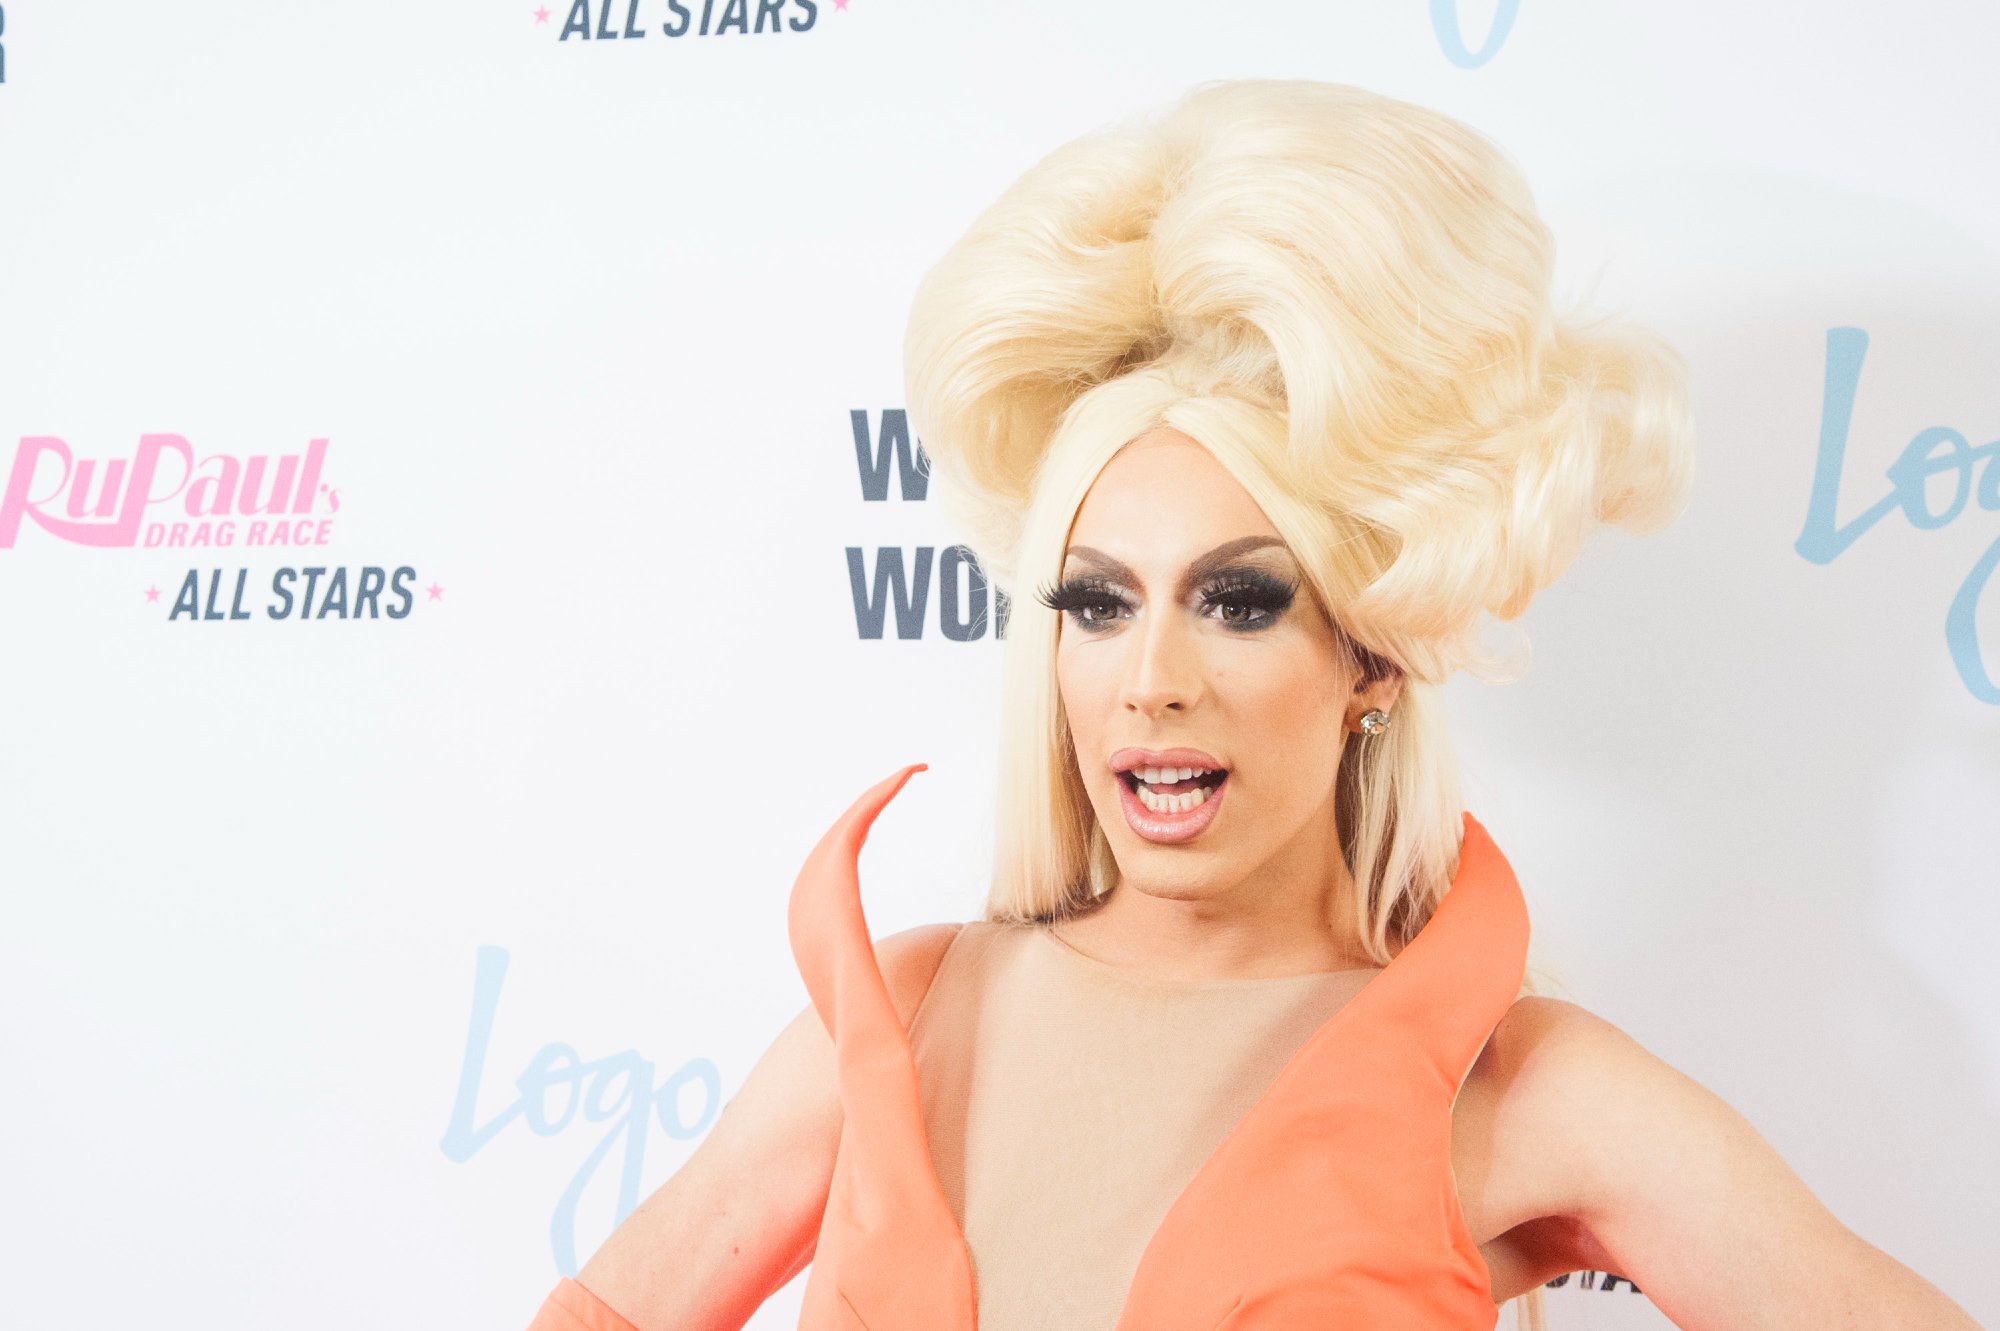 'RuPaul's Drag Race' Snatch Game winner Alaska smiling in a blonde wig and orange dress